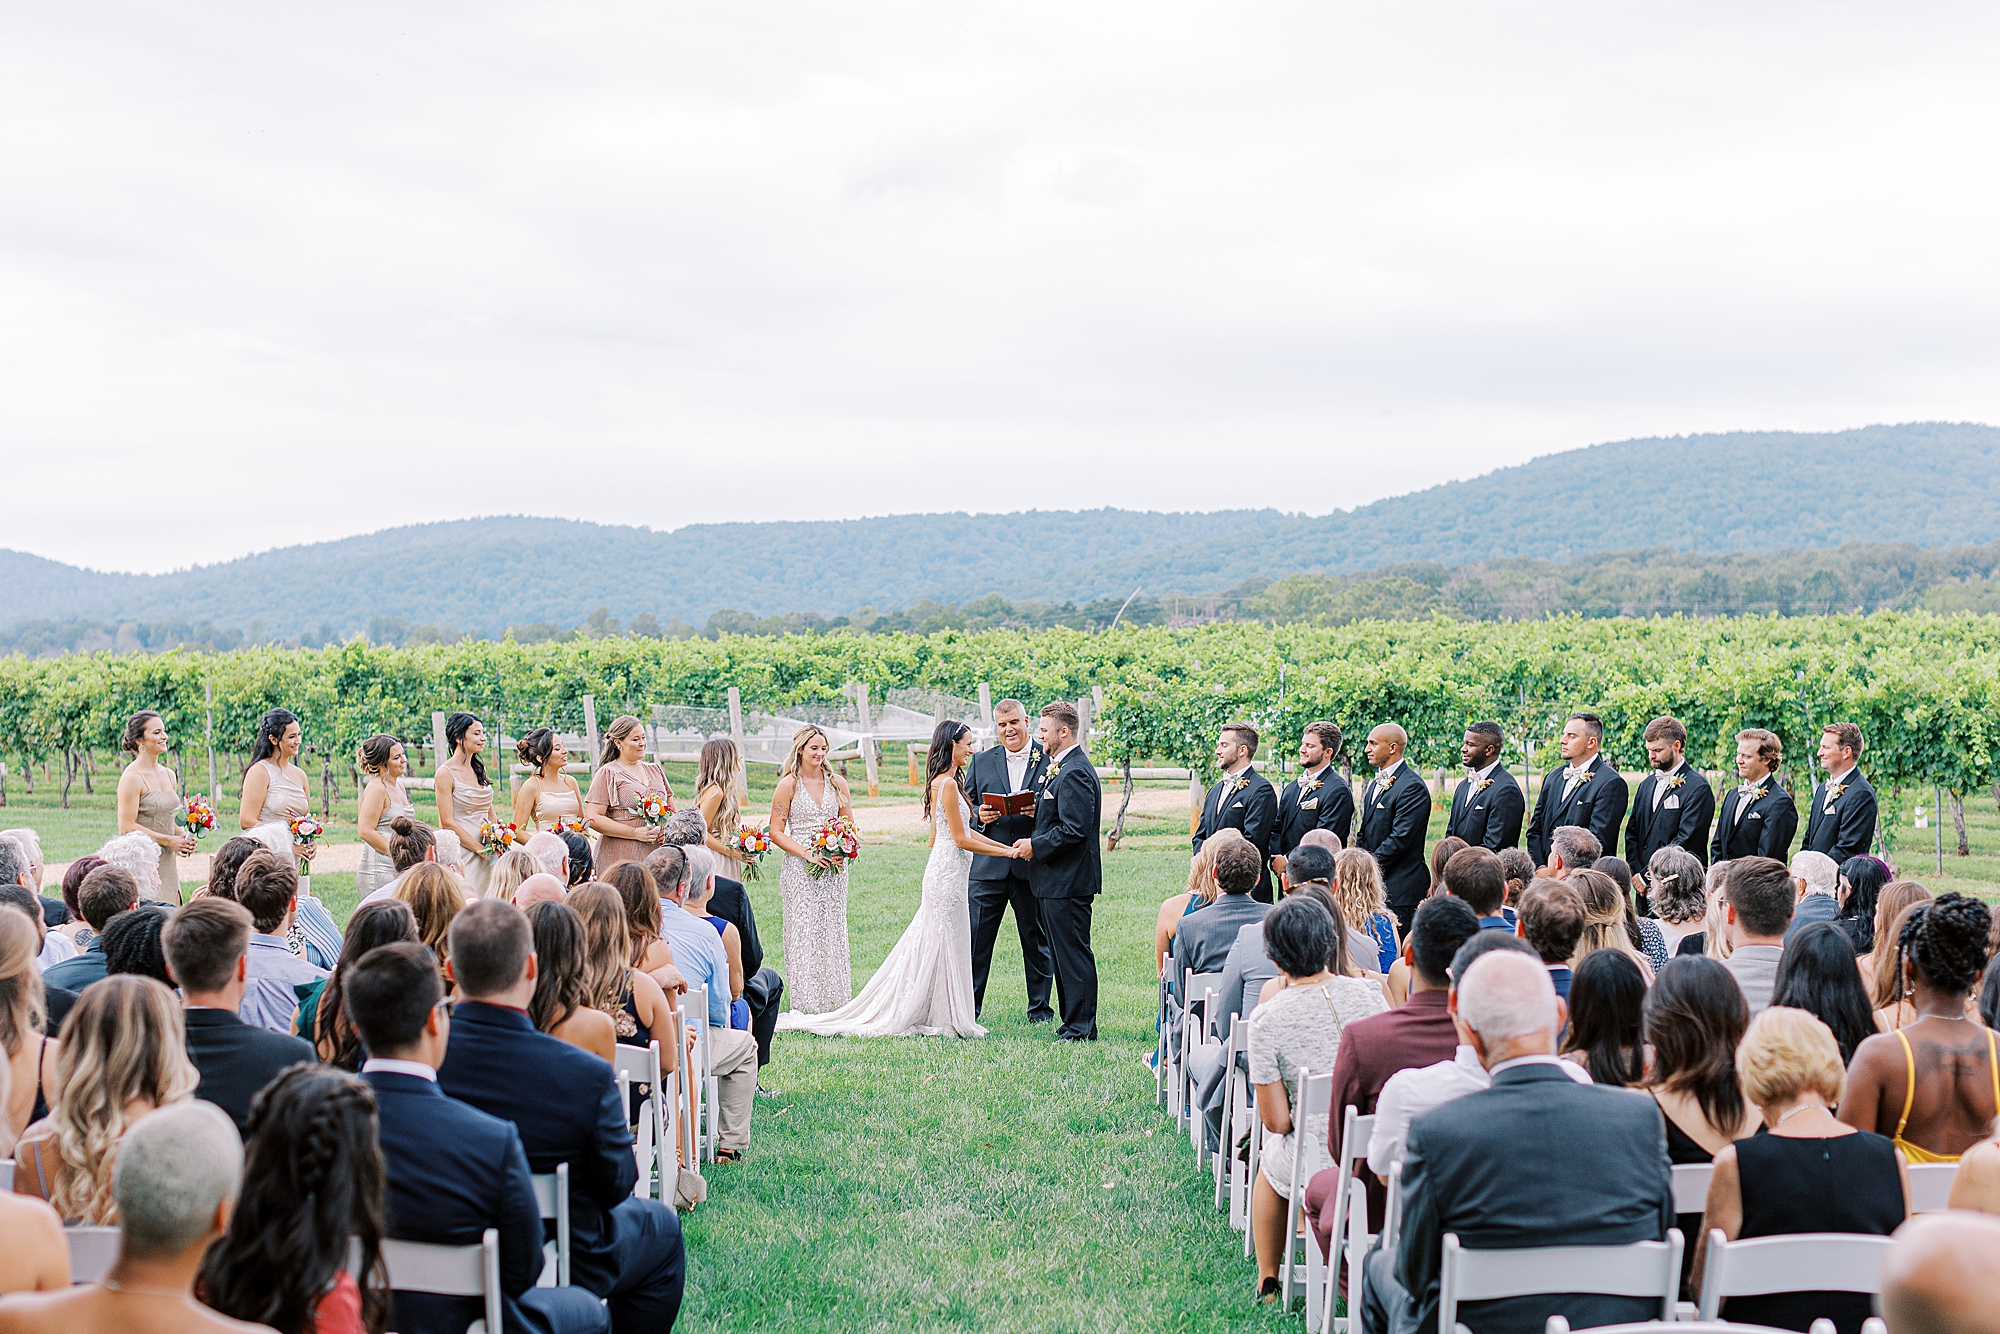 Keswick Vineyards wedding photo of ceremony.